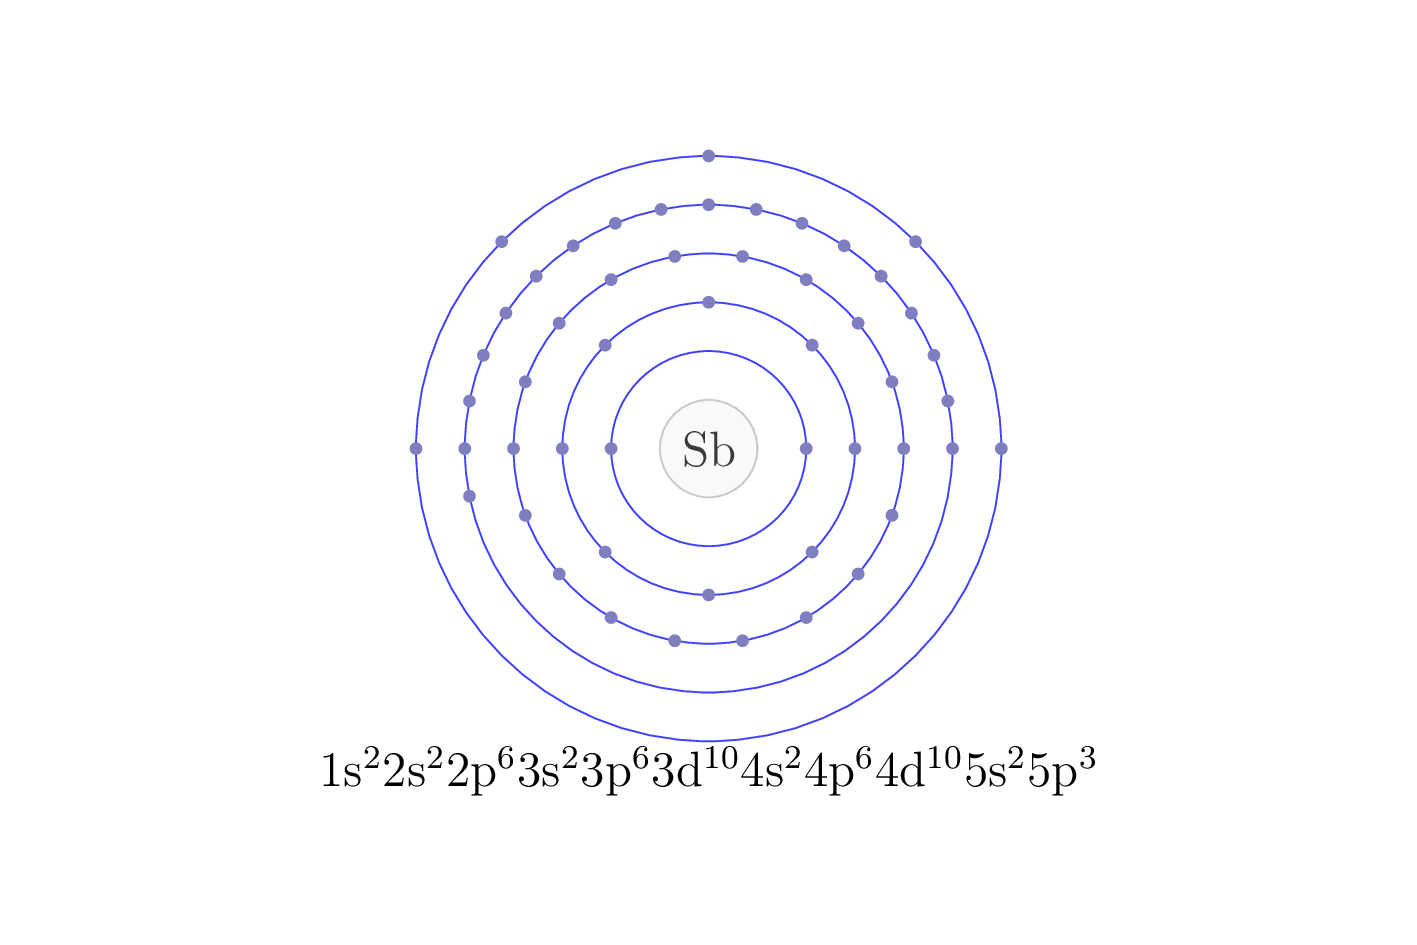 electron configuration of element Sb